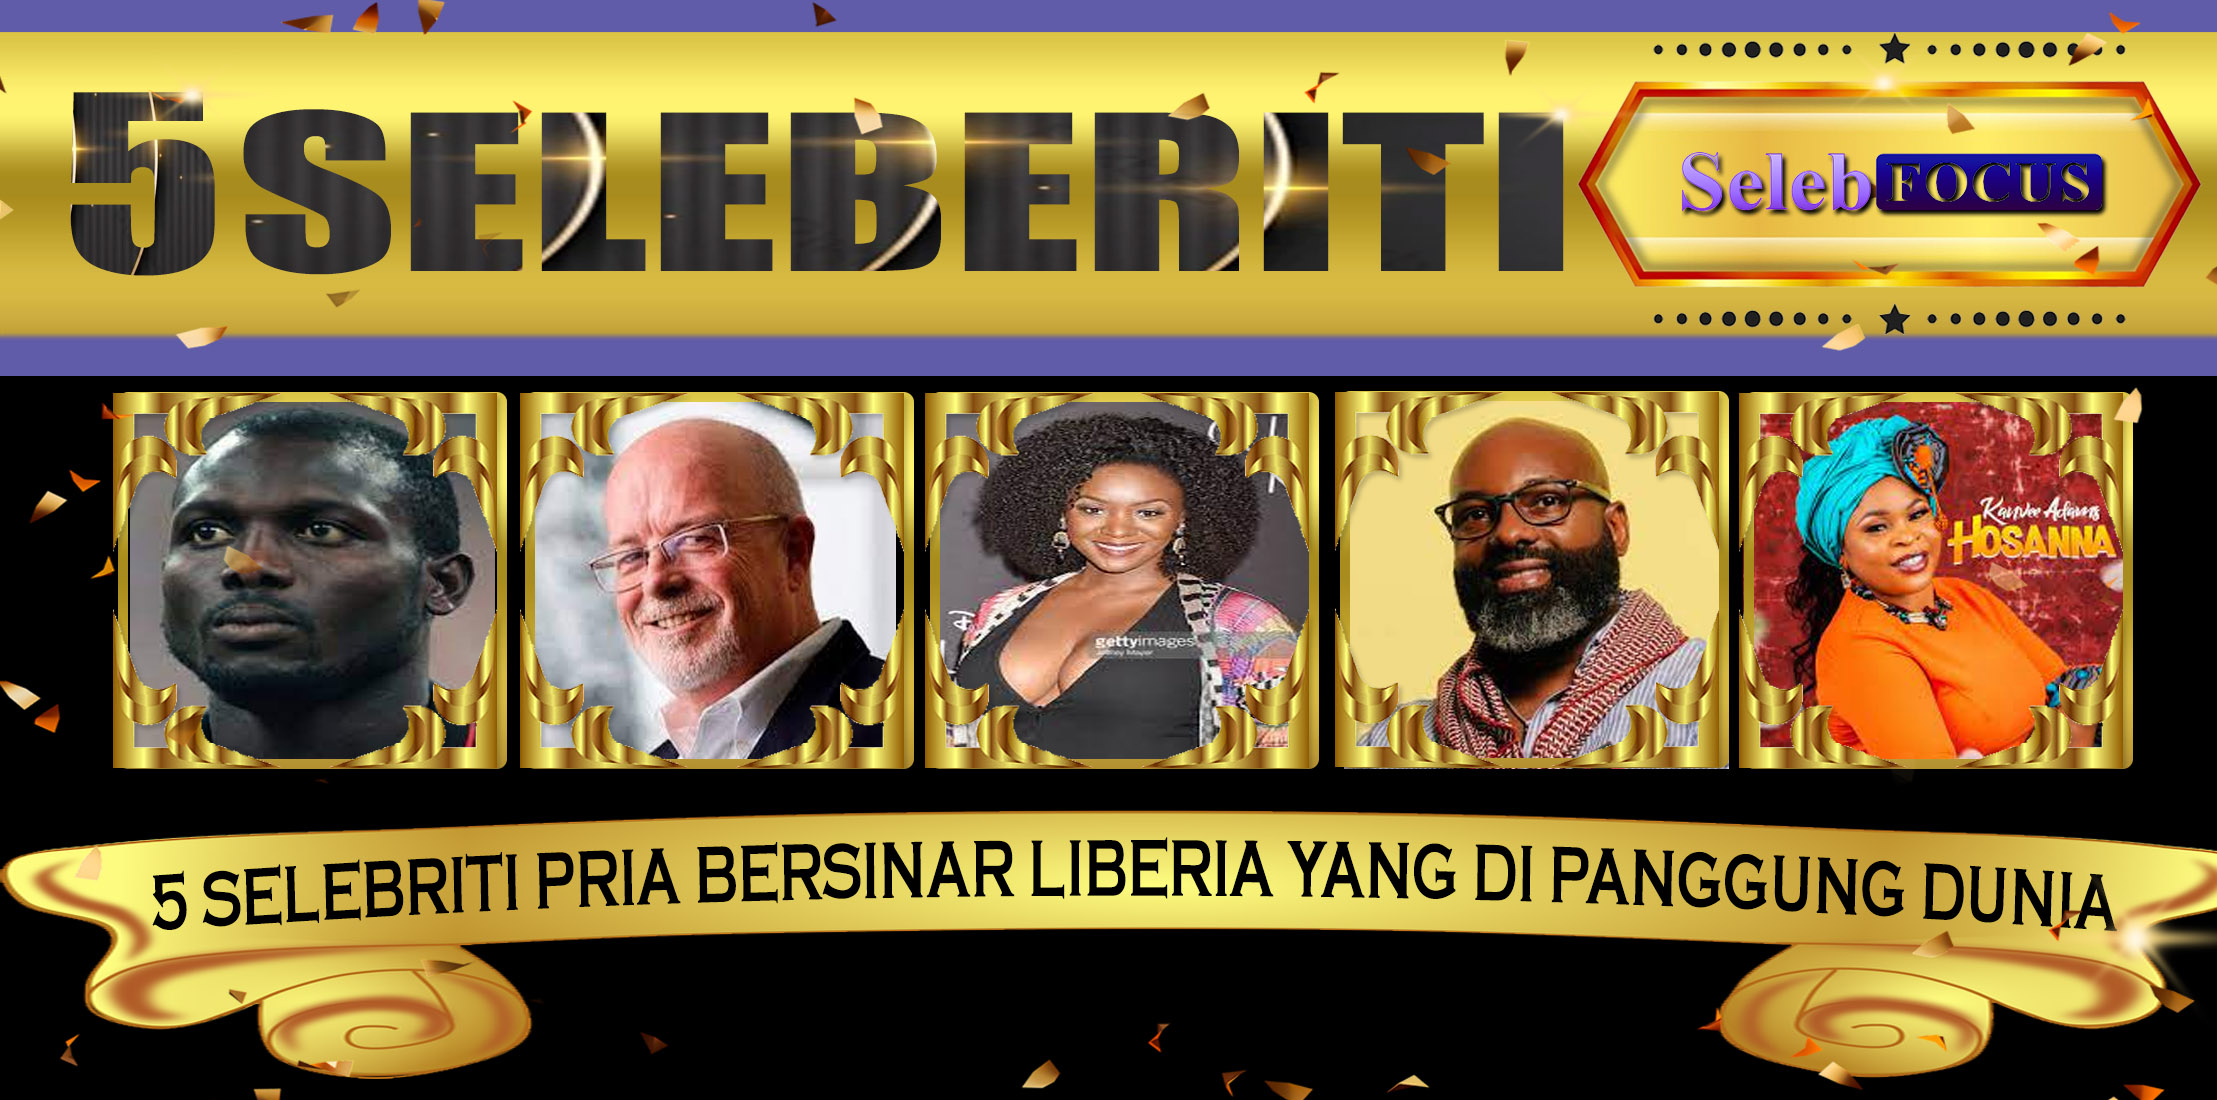 5 Selebriti Pria Bersinar Liberia yang di Panggung Dunia